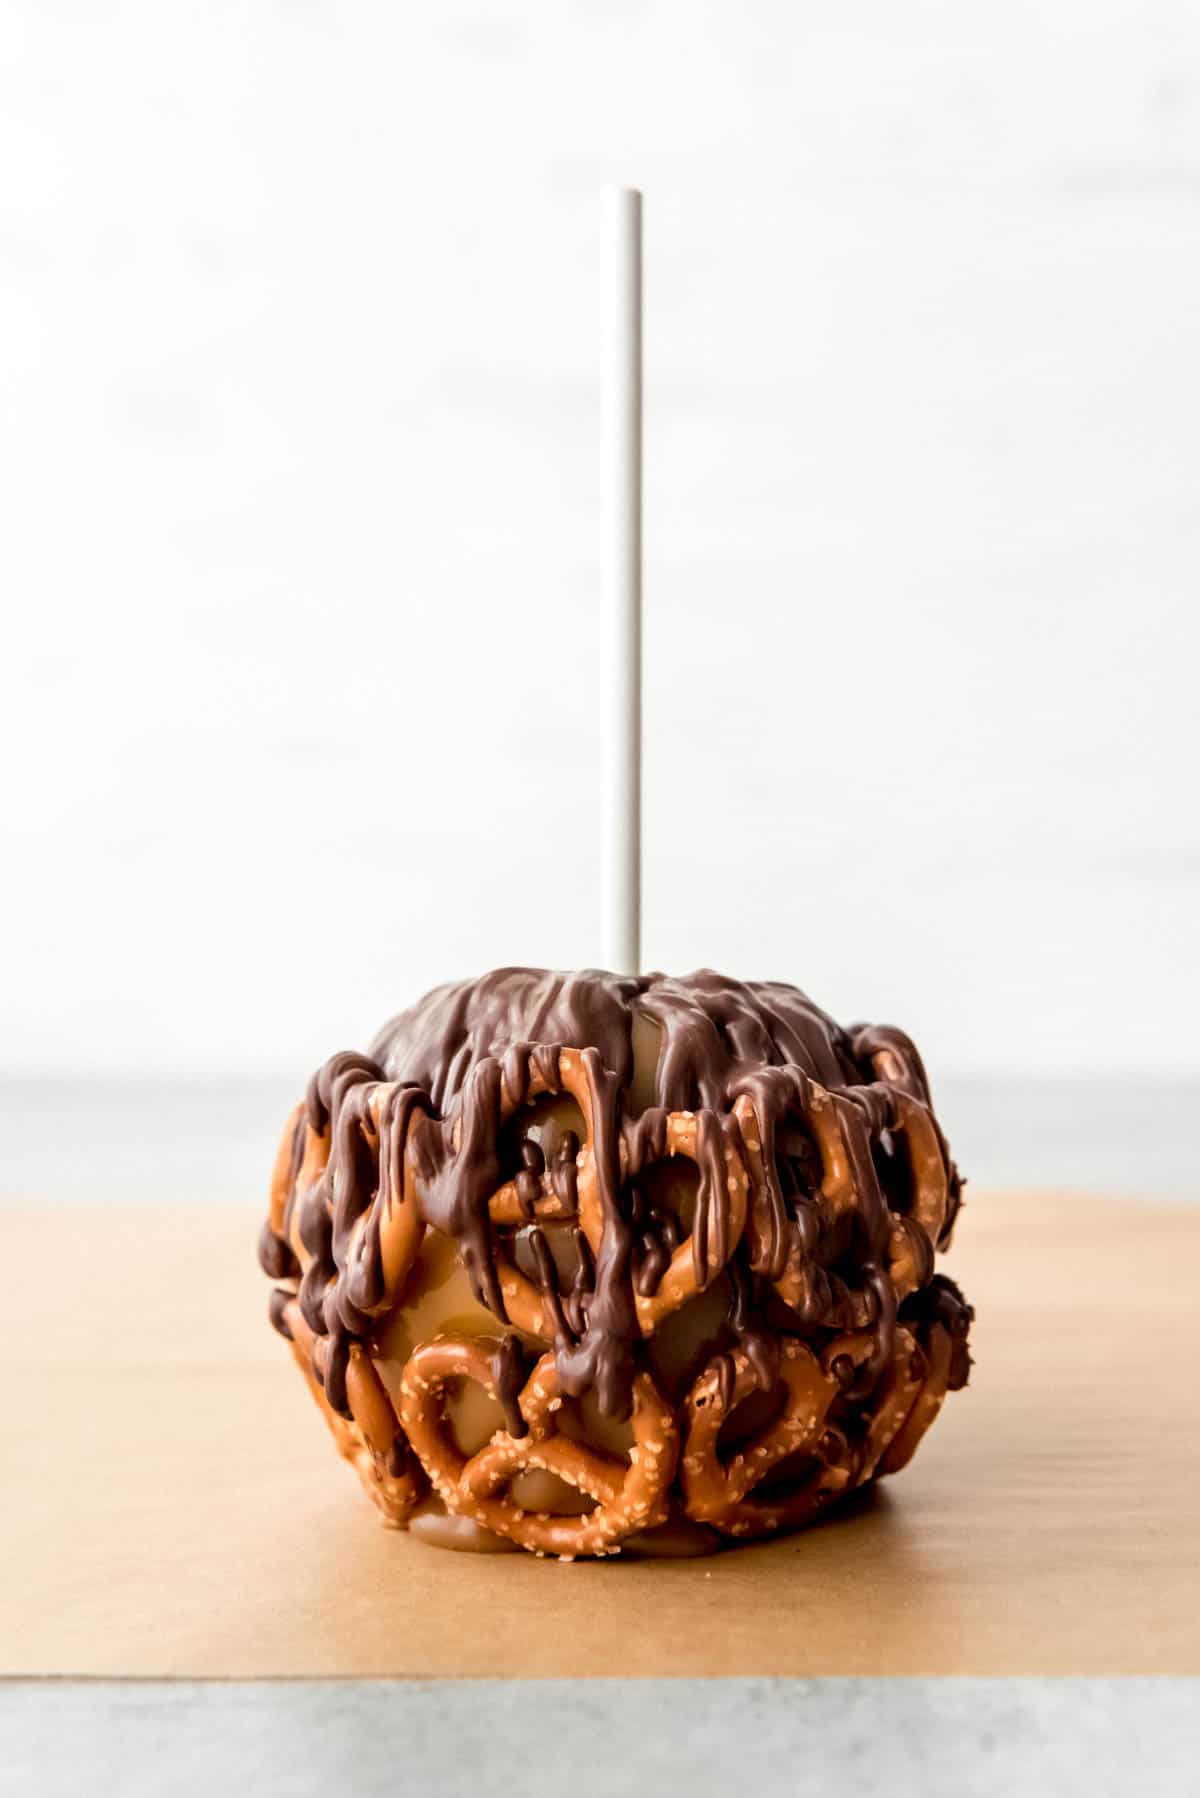 An image of a chocolate pretzel caramel apple.